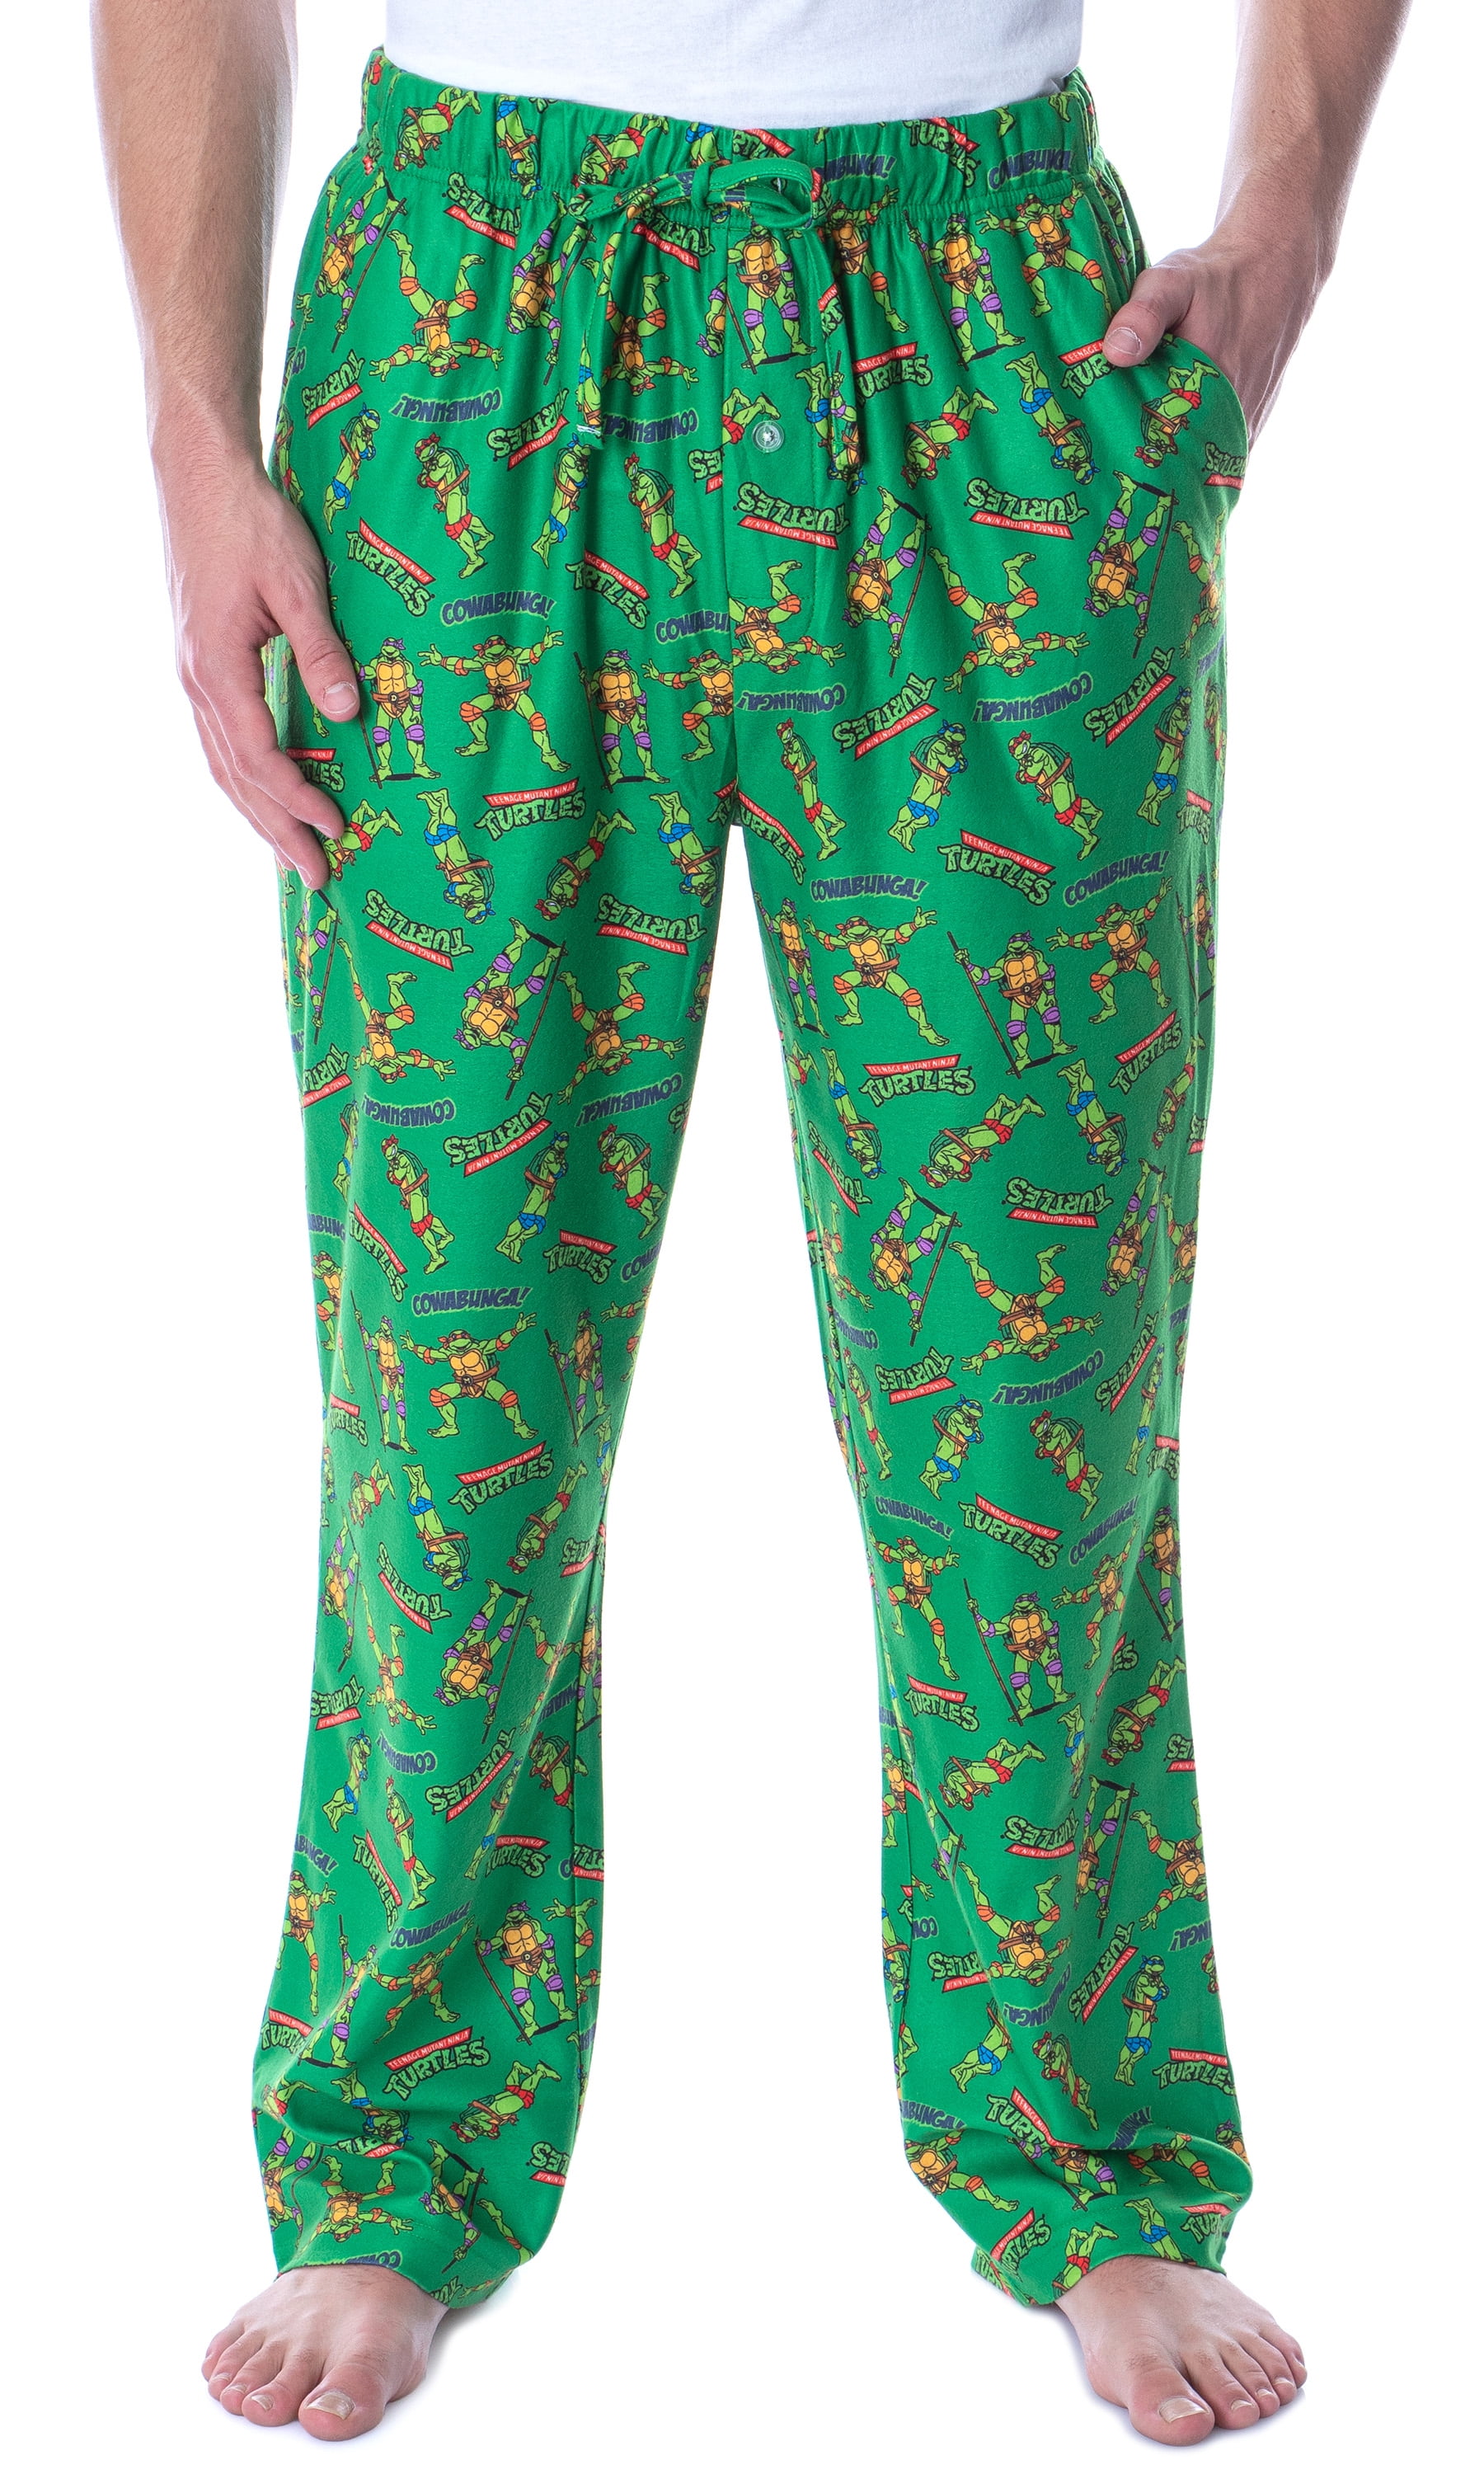  Teenage Mutant Ninja Turtles Boys Onesie, Kids All in One  Sleepsuit Pyjamas, Want a Pizza This? PJs